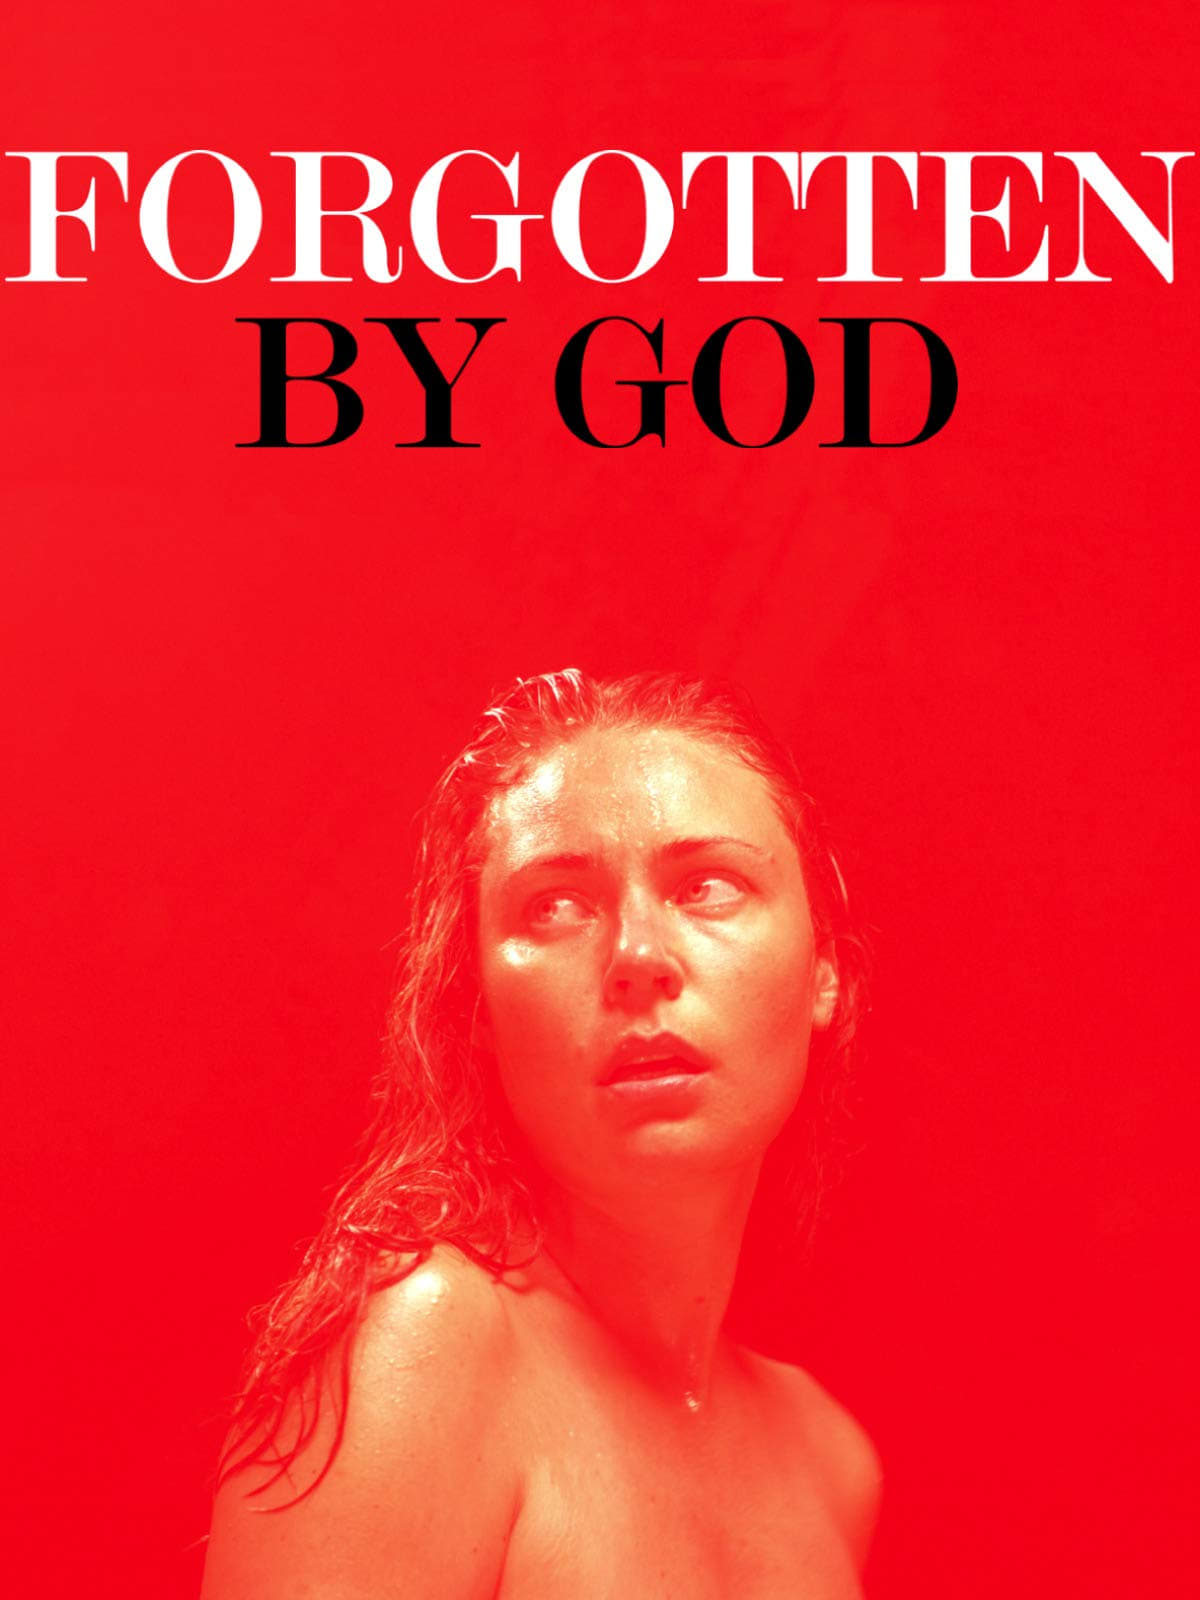 Forgotten by God